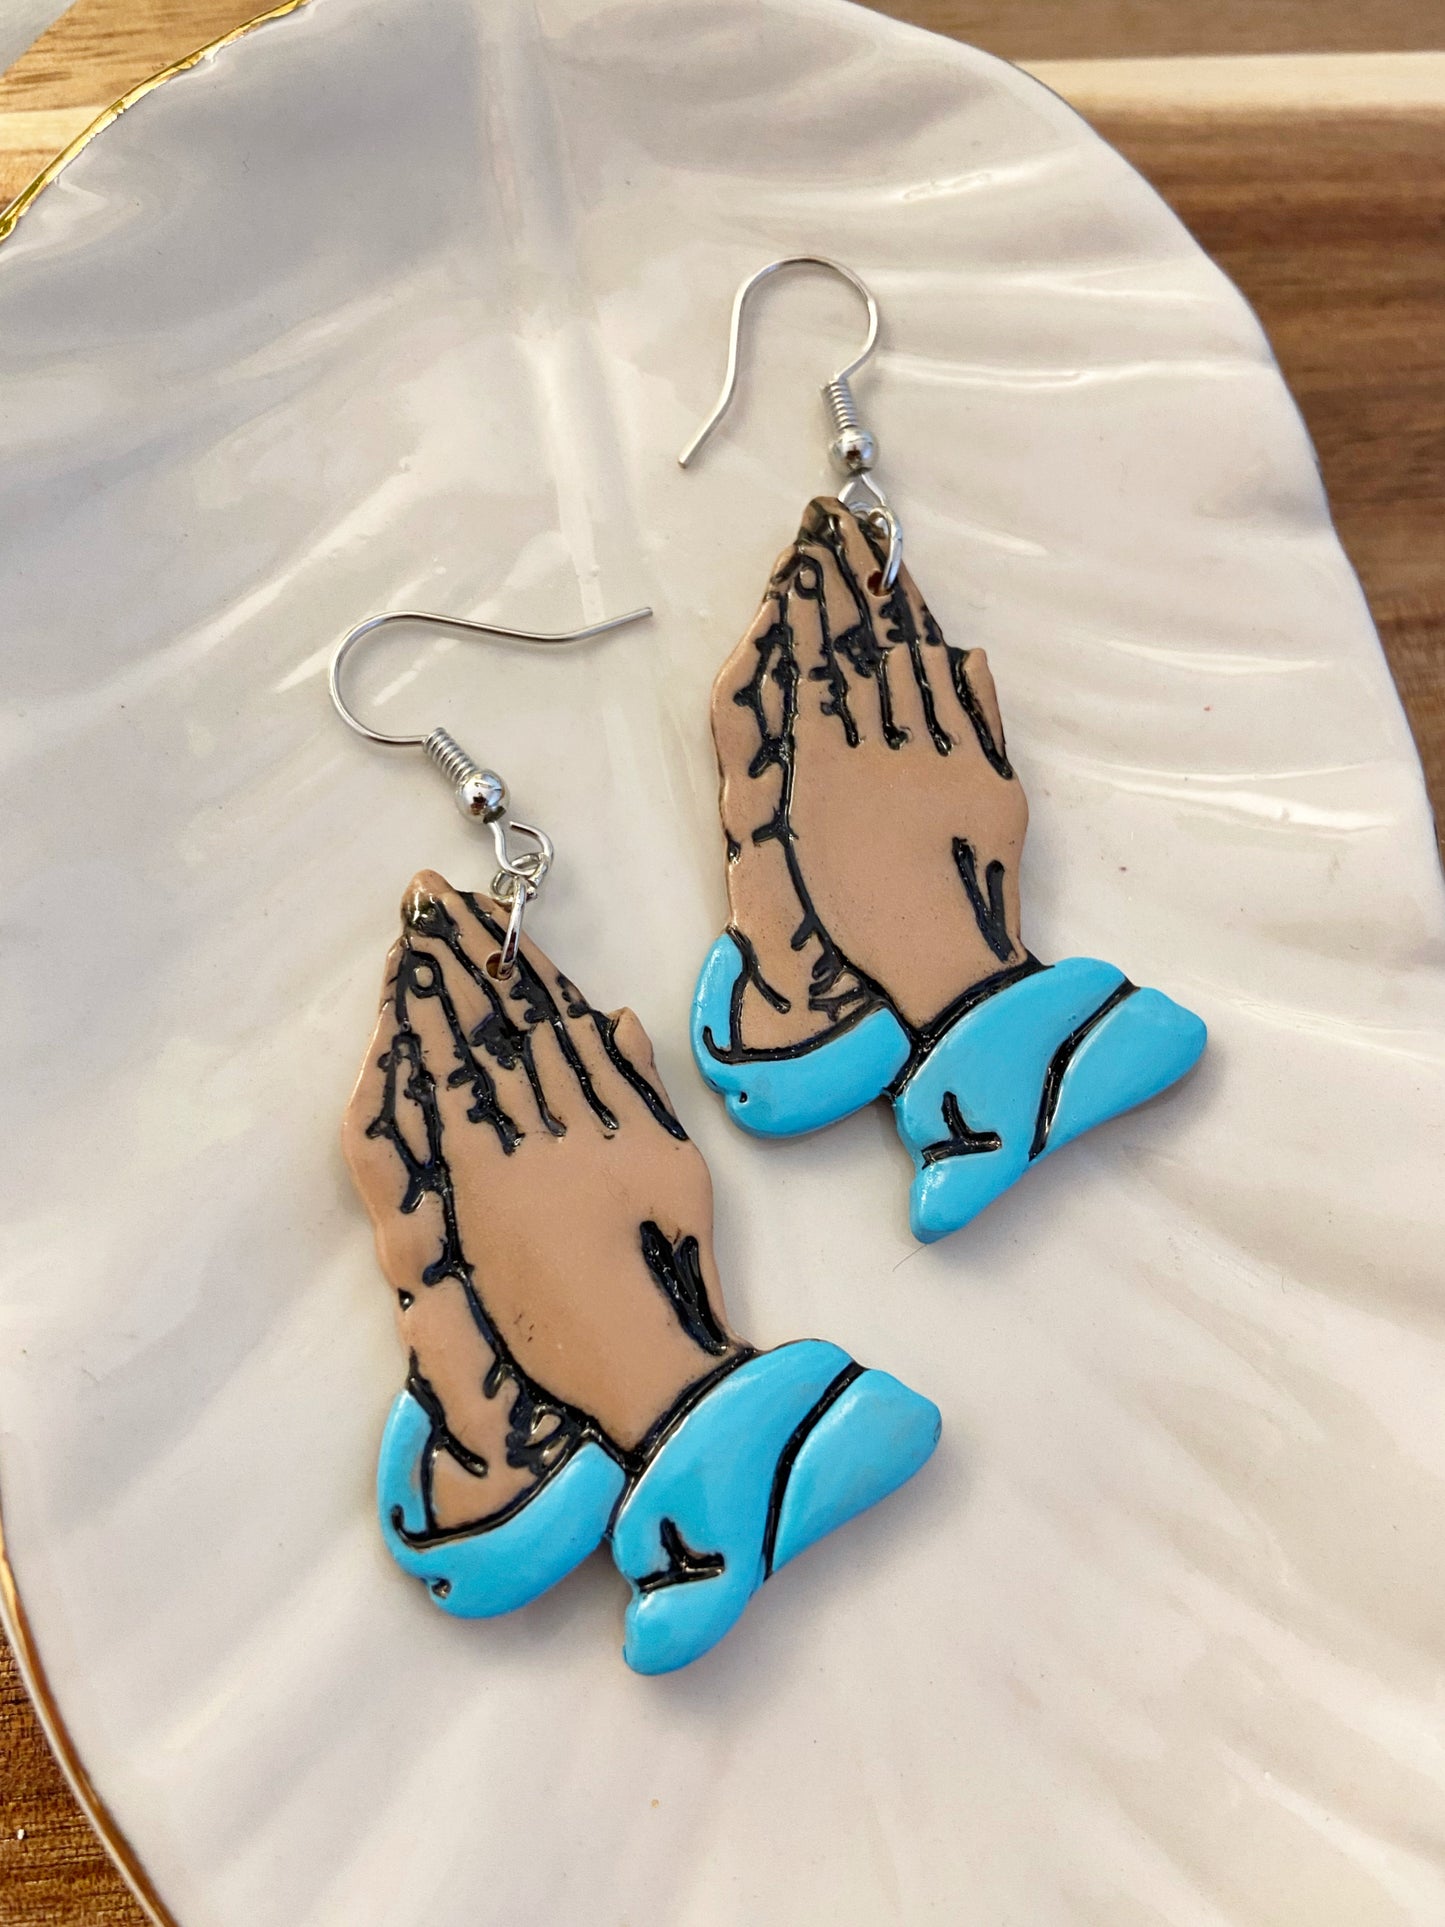 Saint or Sinner- Praying hands polymer clay handpainted earrings